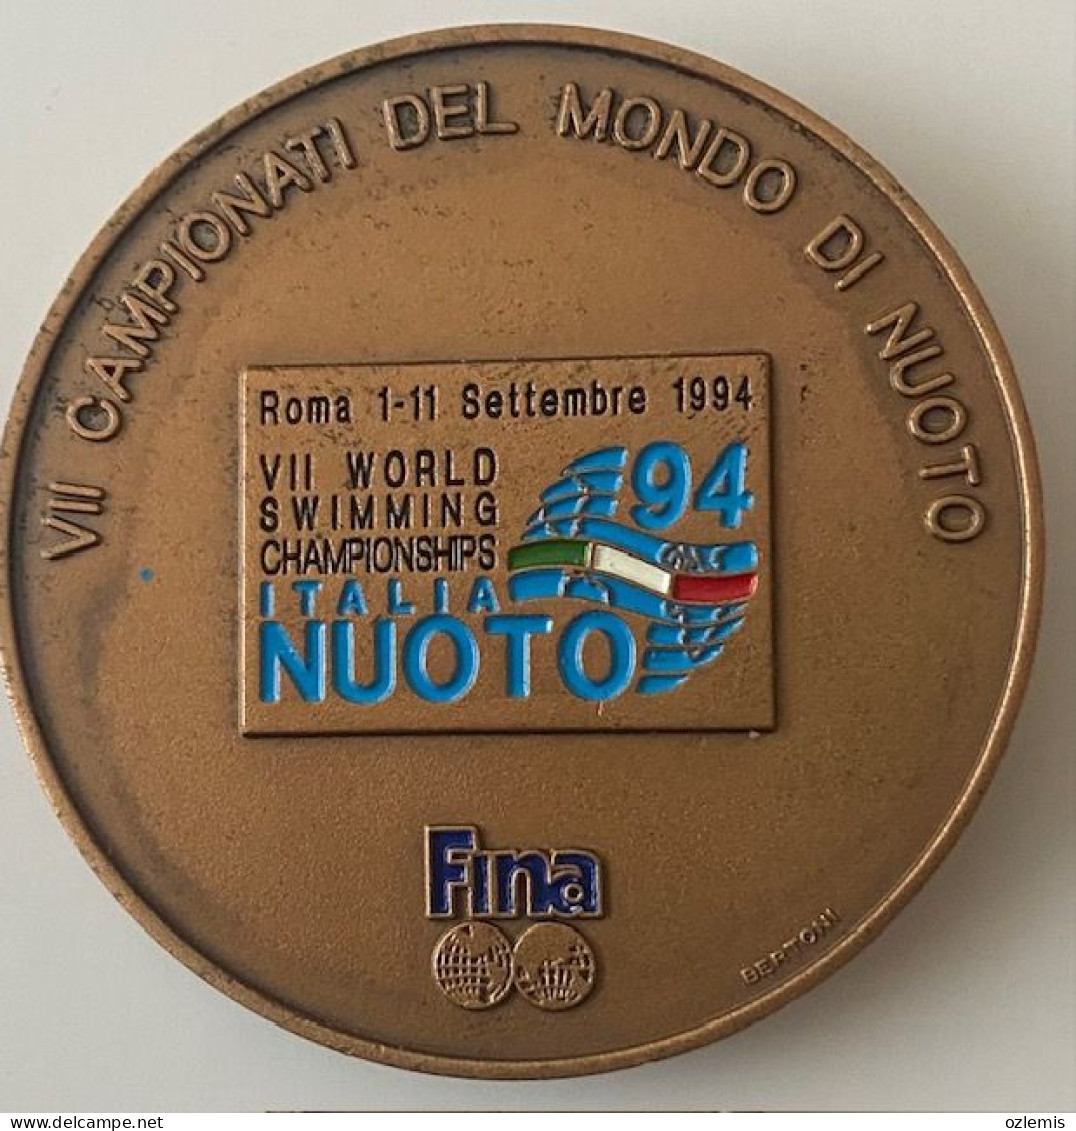 ITALIA,VII WORLD SWIMMING CHAMPIONSHIPS 94 ITALIA NUOTO,MEDAL,BERTONI - Schwimmen